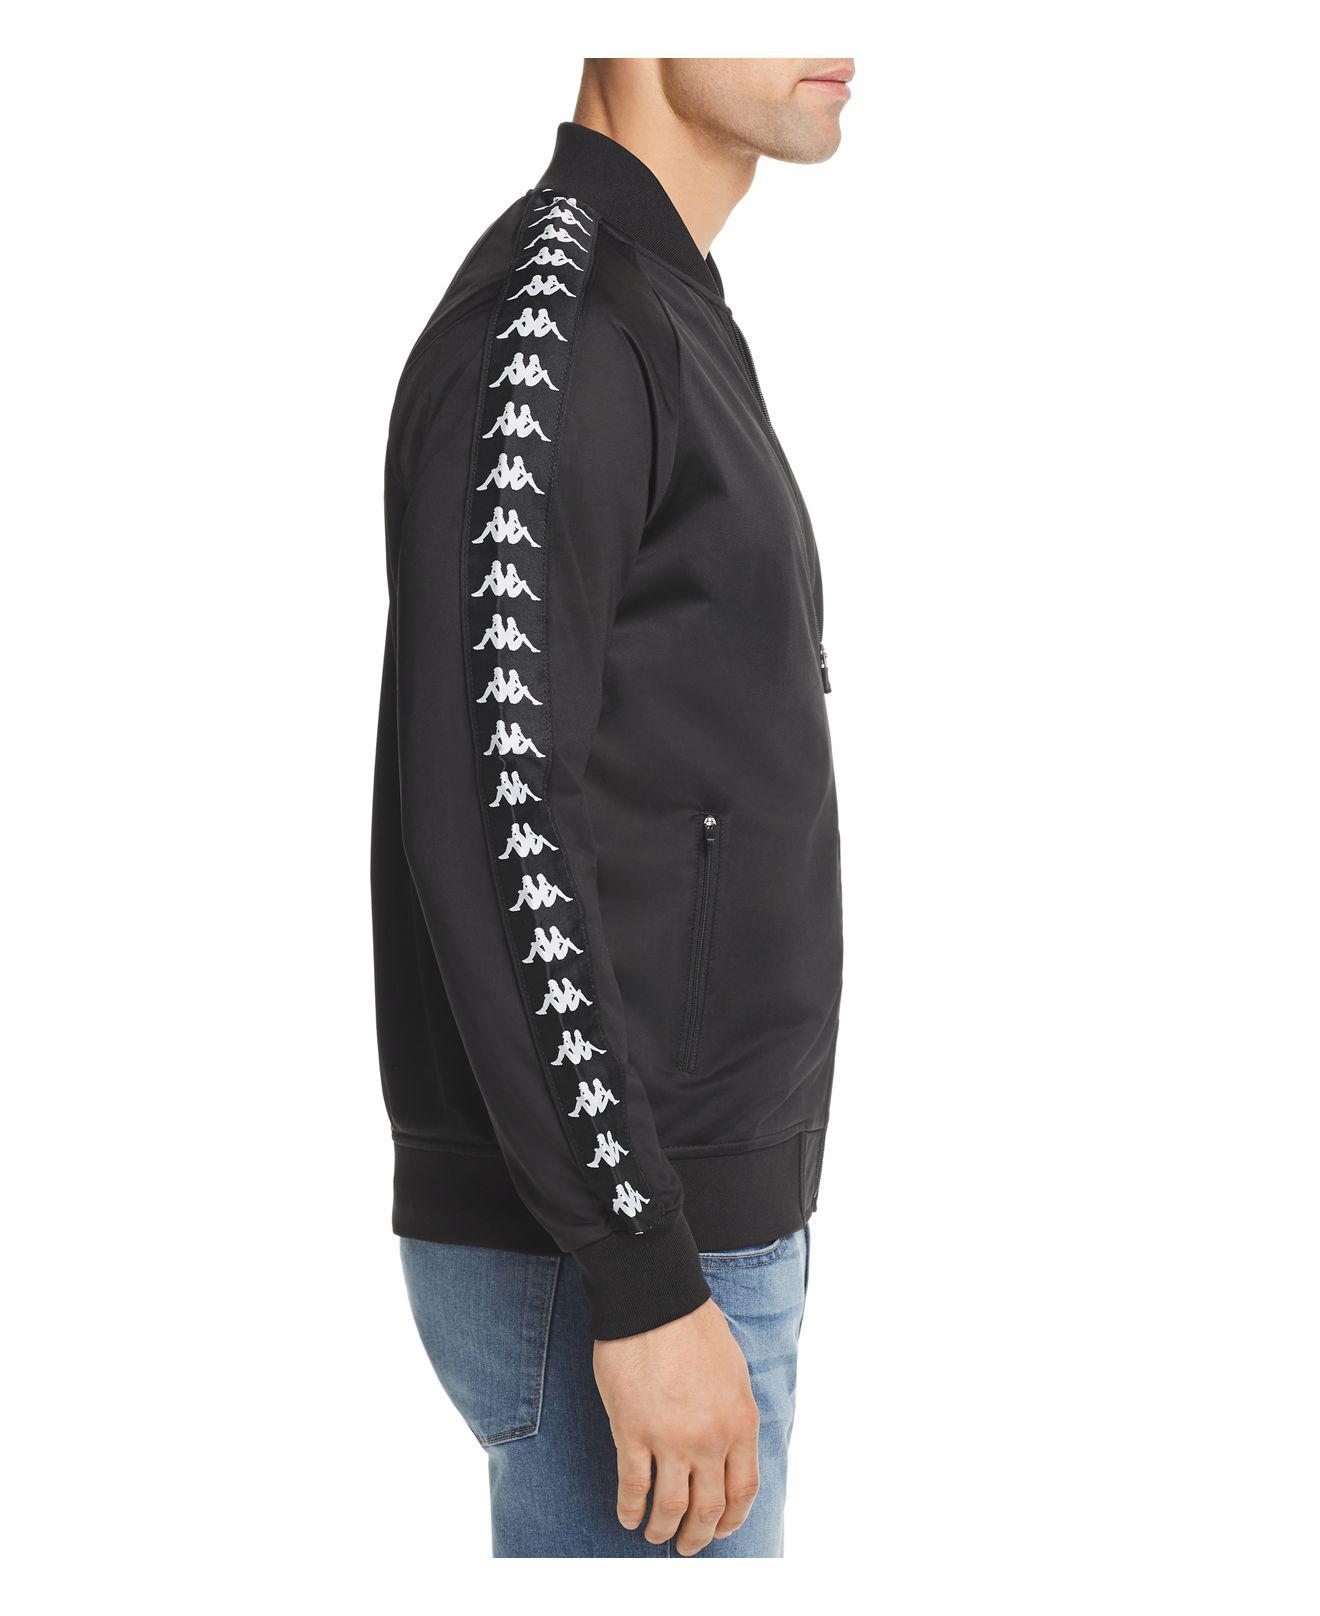 Kappa Banda Slim Fit Track Jacket in Black for Men - Lyst